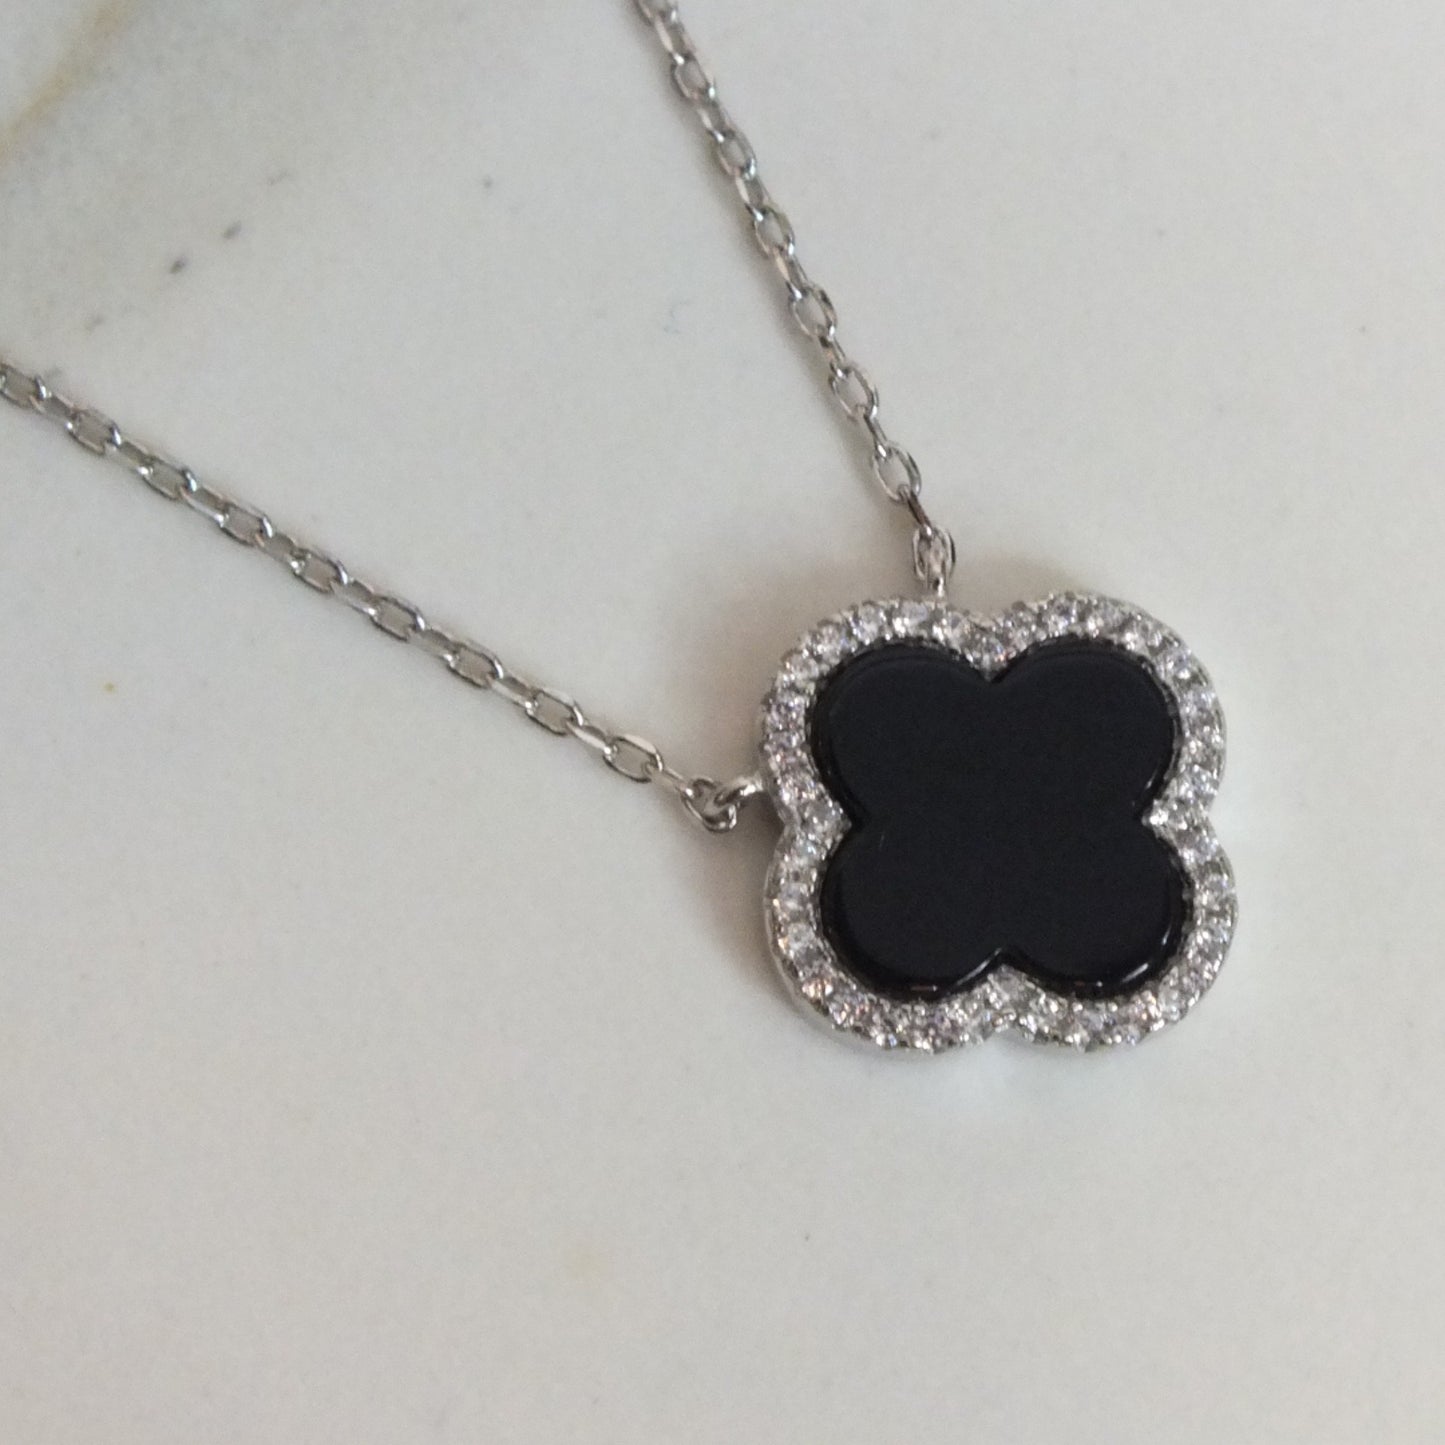 Black Stone Silver Necklace - سلسال فضة حجر اسود